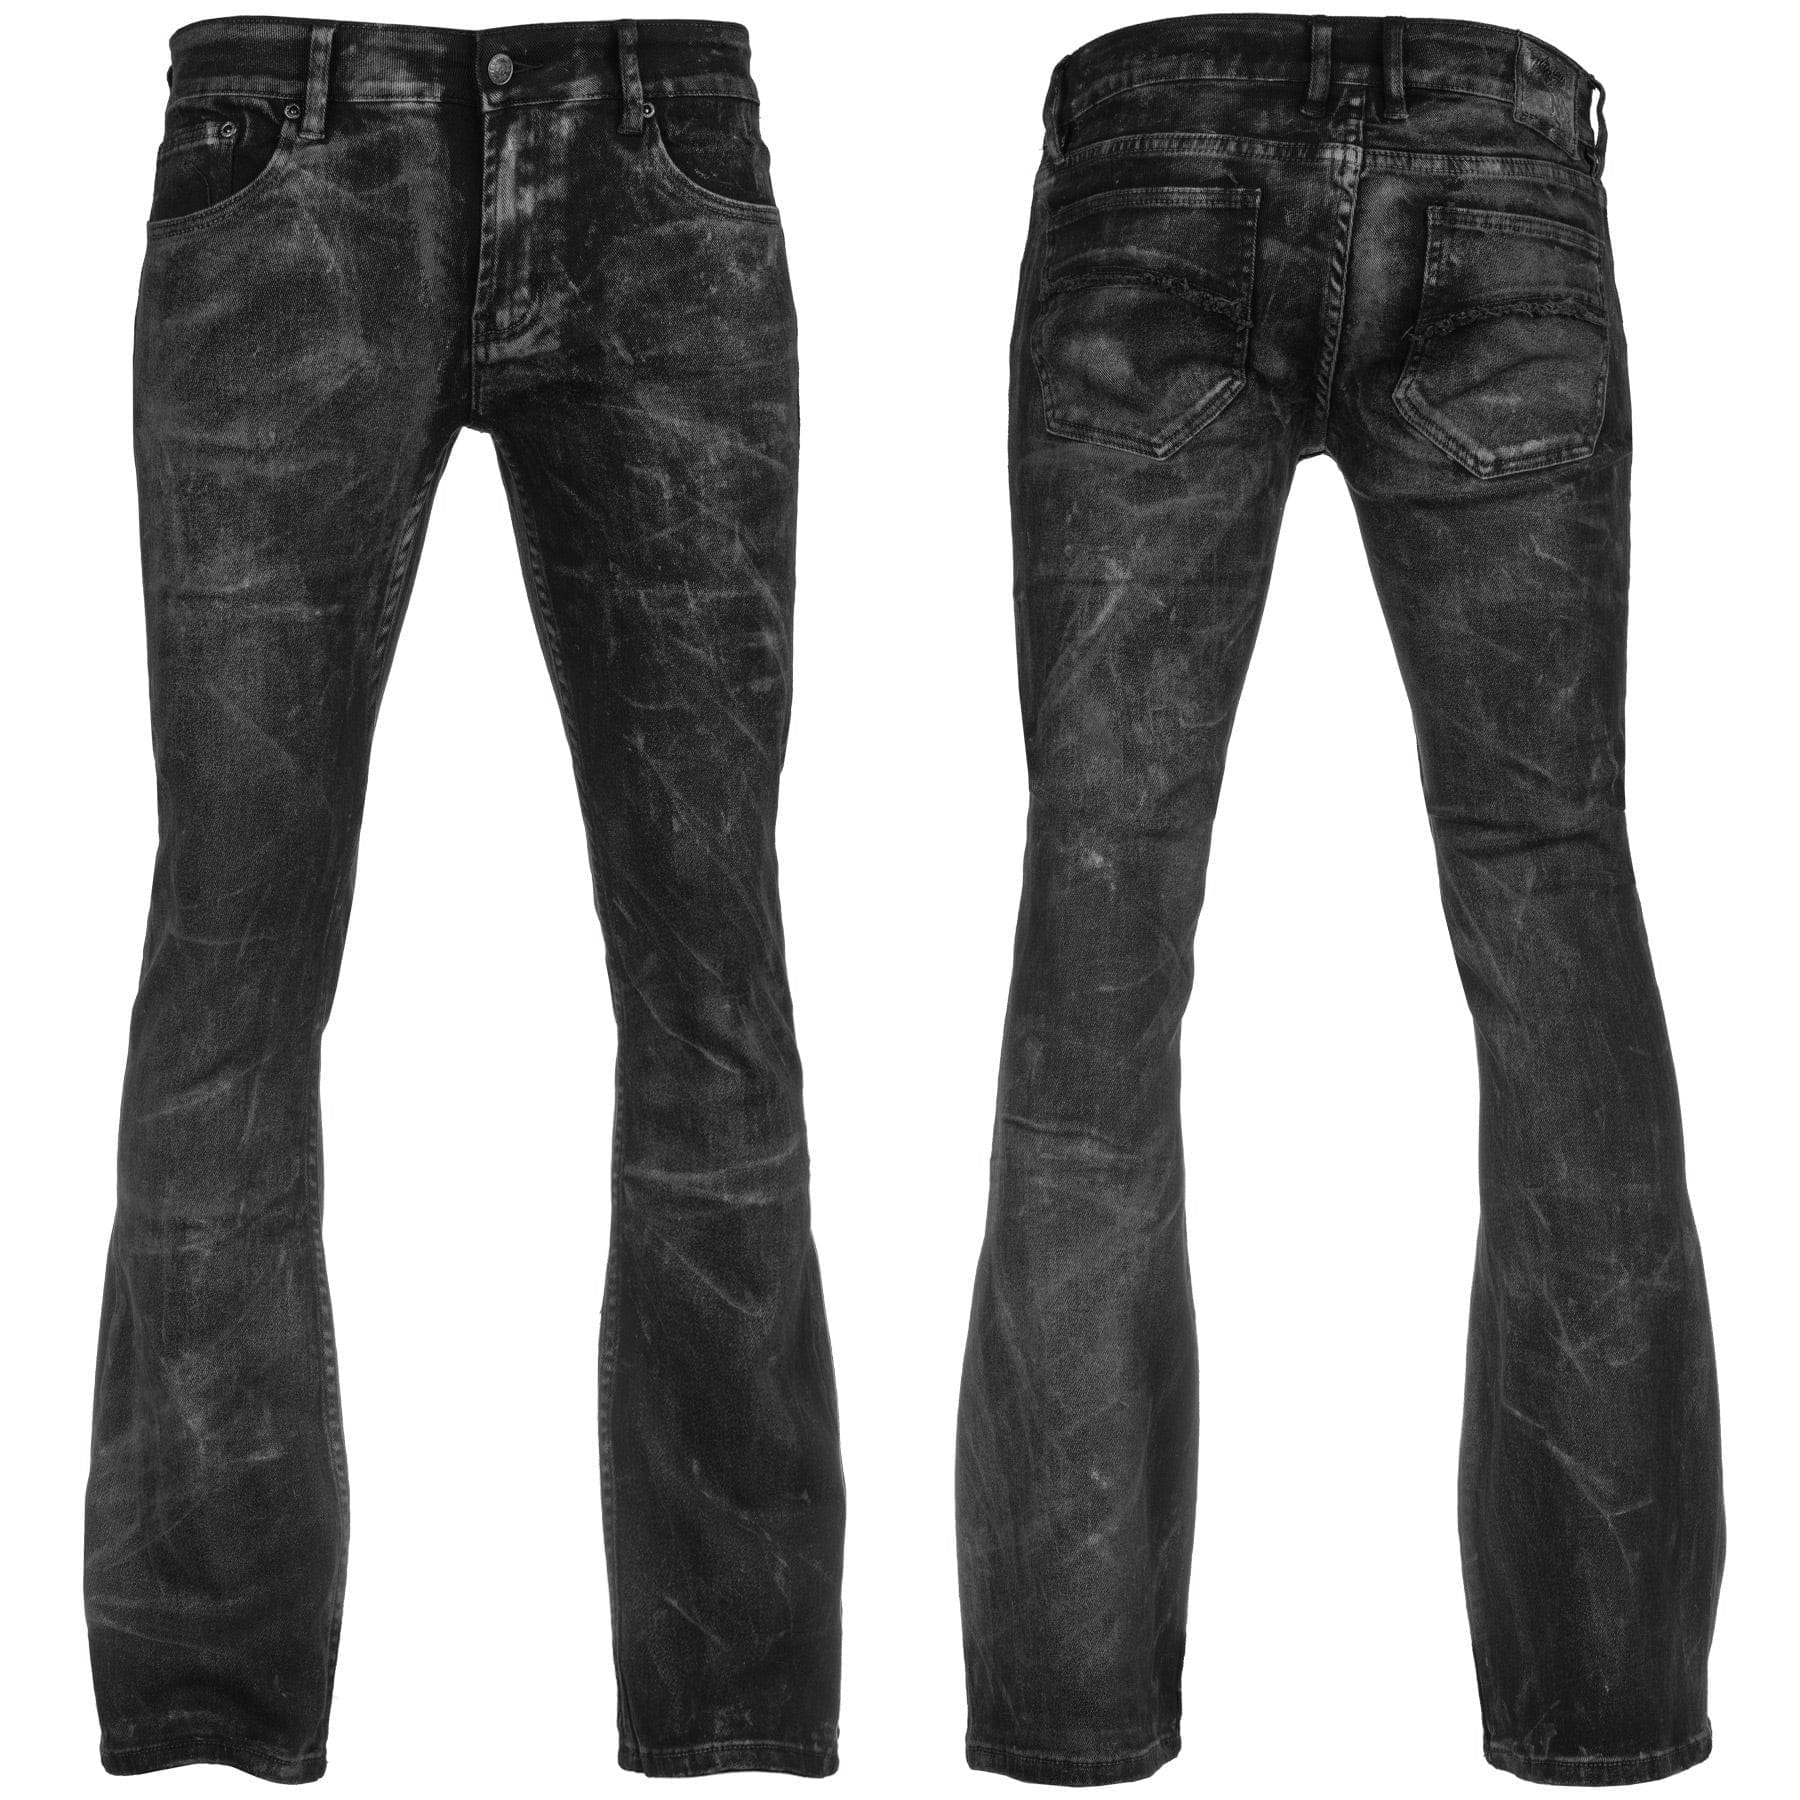 Custom Chop Shop Pants Wornstar Custom Jeans - Smoke Washed